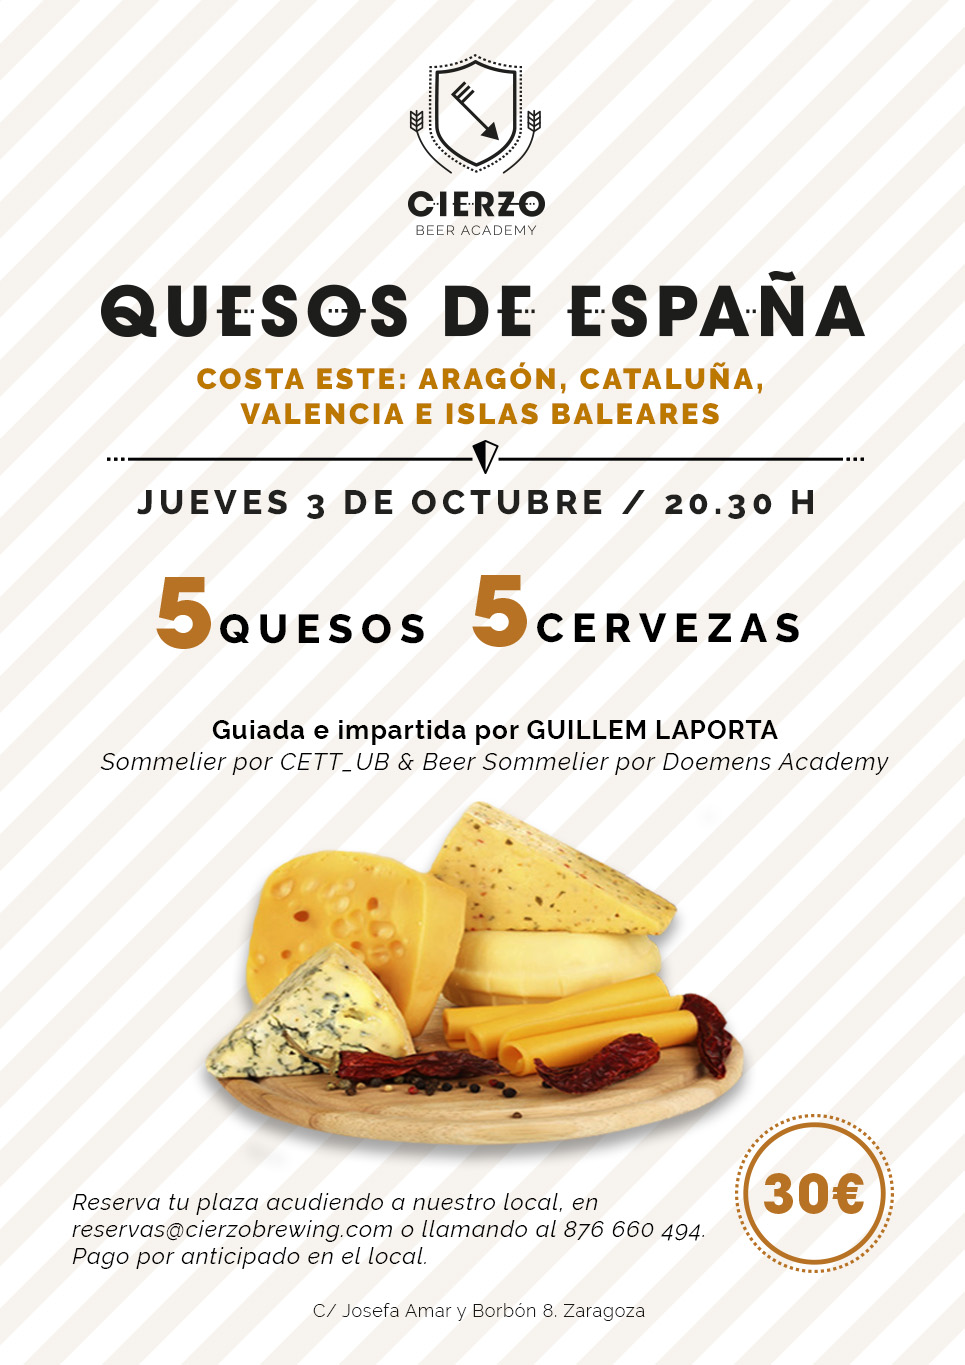 cata cena quesos españoles aragoneses cerveza artesana